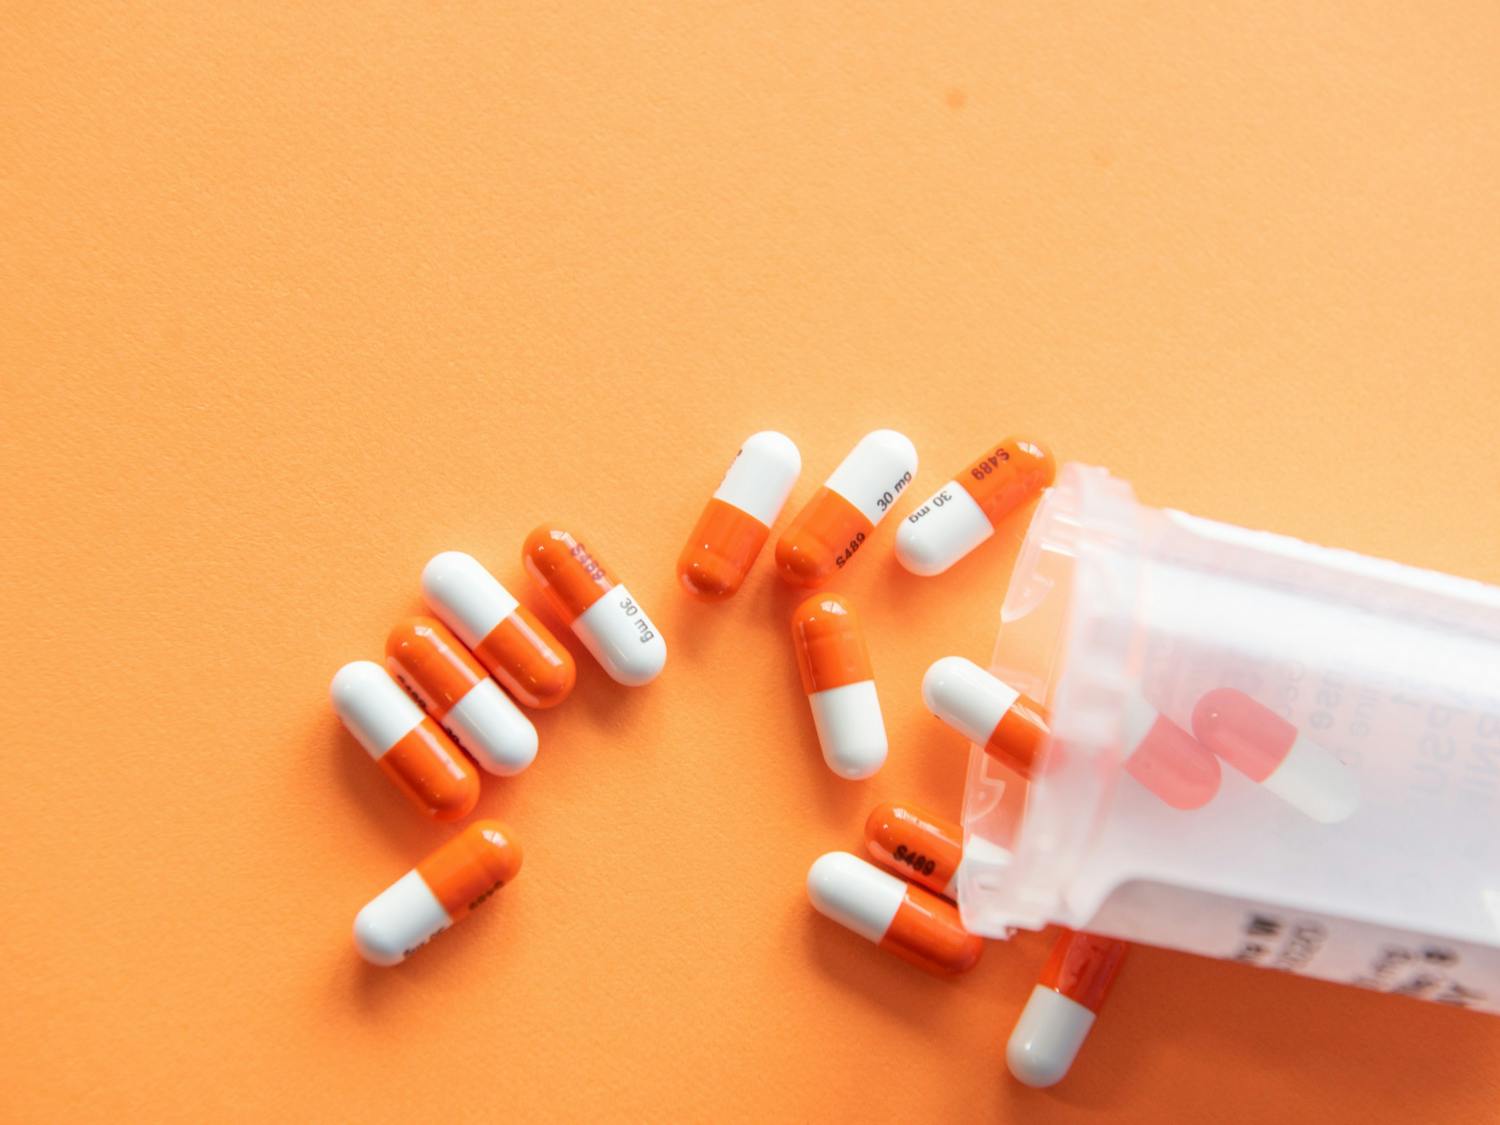 Prescription drugs with a pill bottle | Source: Unsplash Christina Victoria Craft